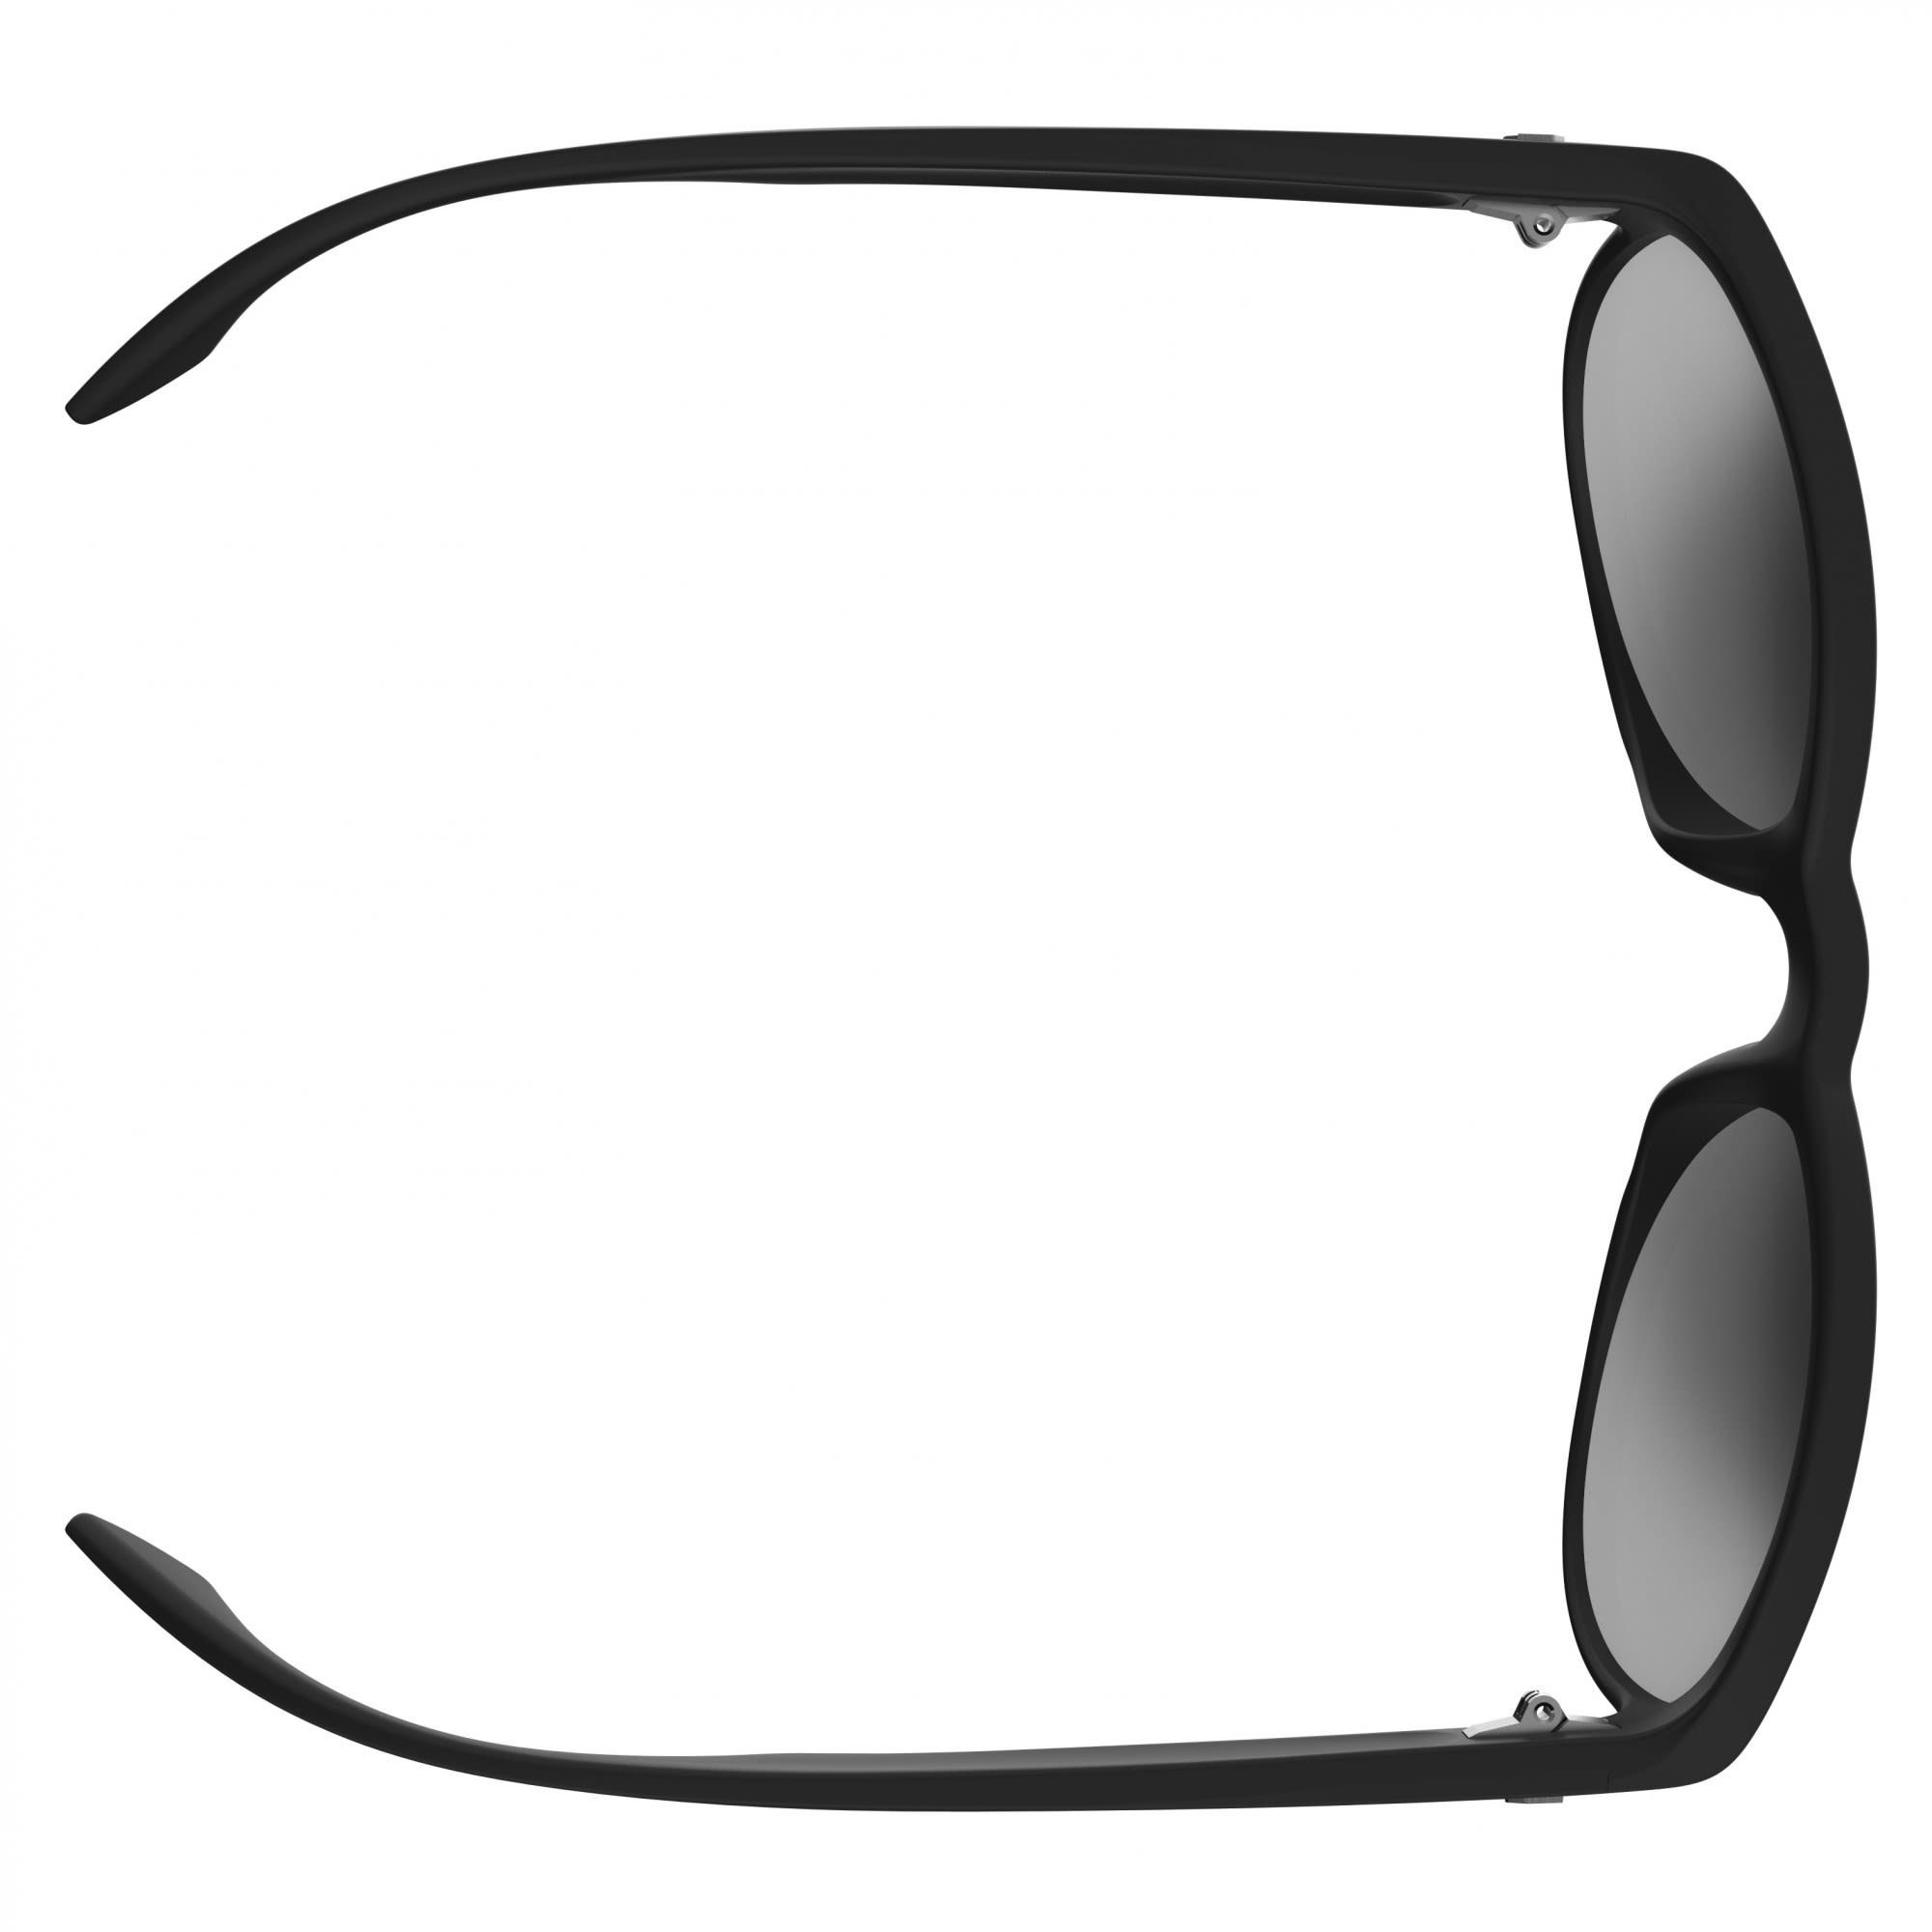 Scott Sonnenbrille Scott Sway Black Sunglasses Matt Accessoires - Grey